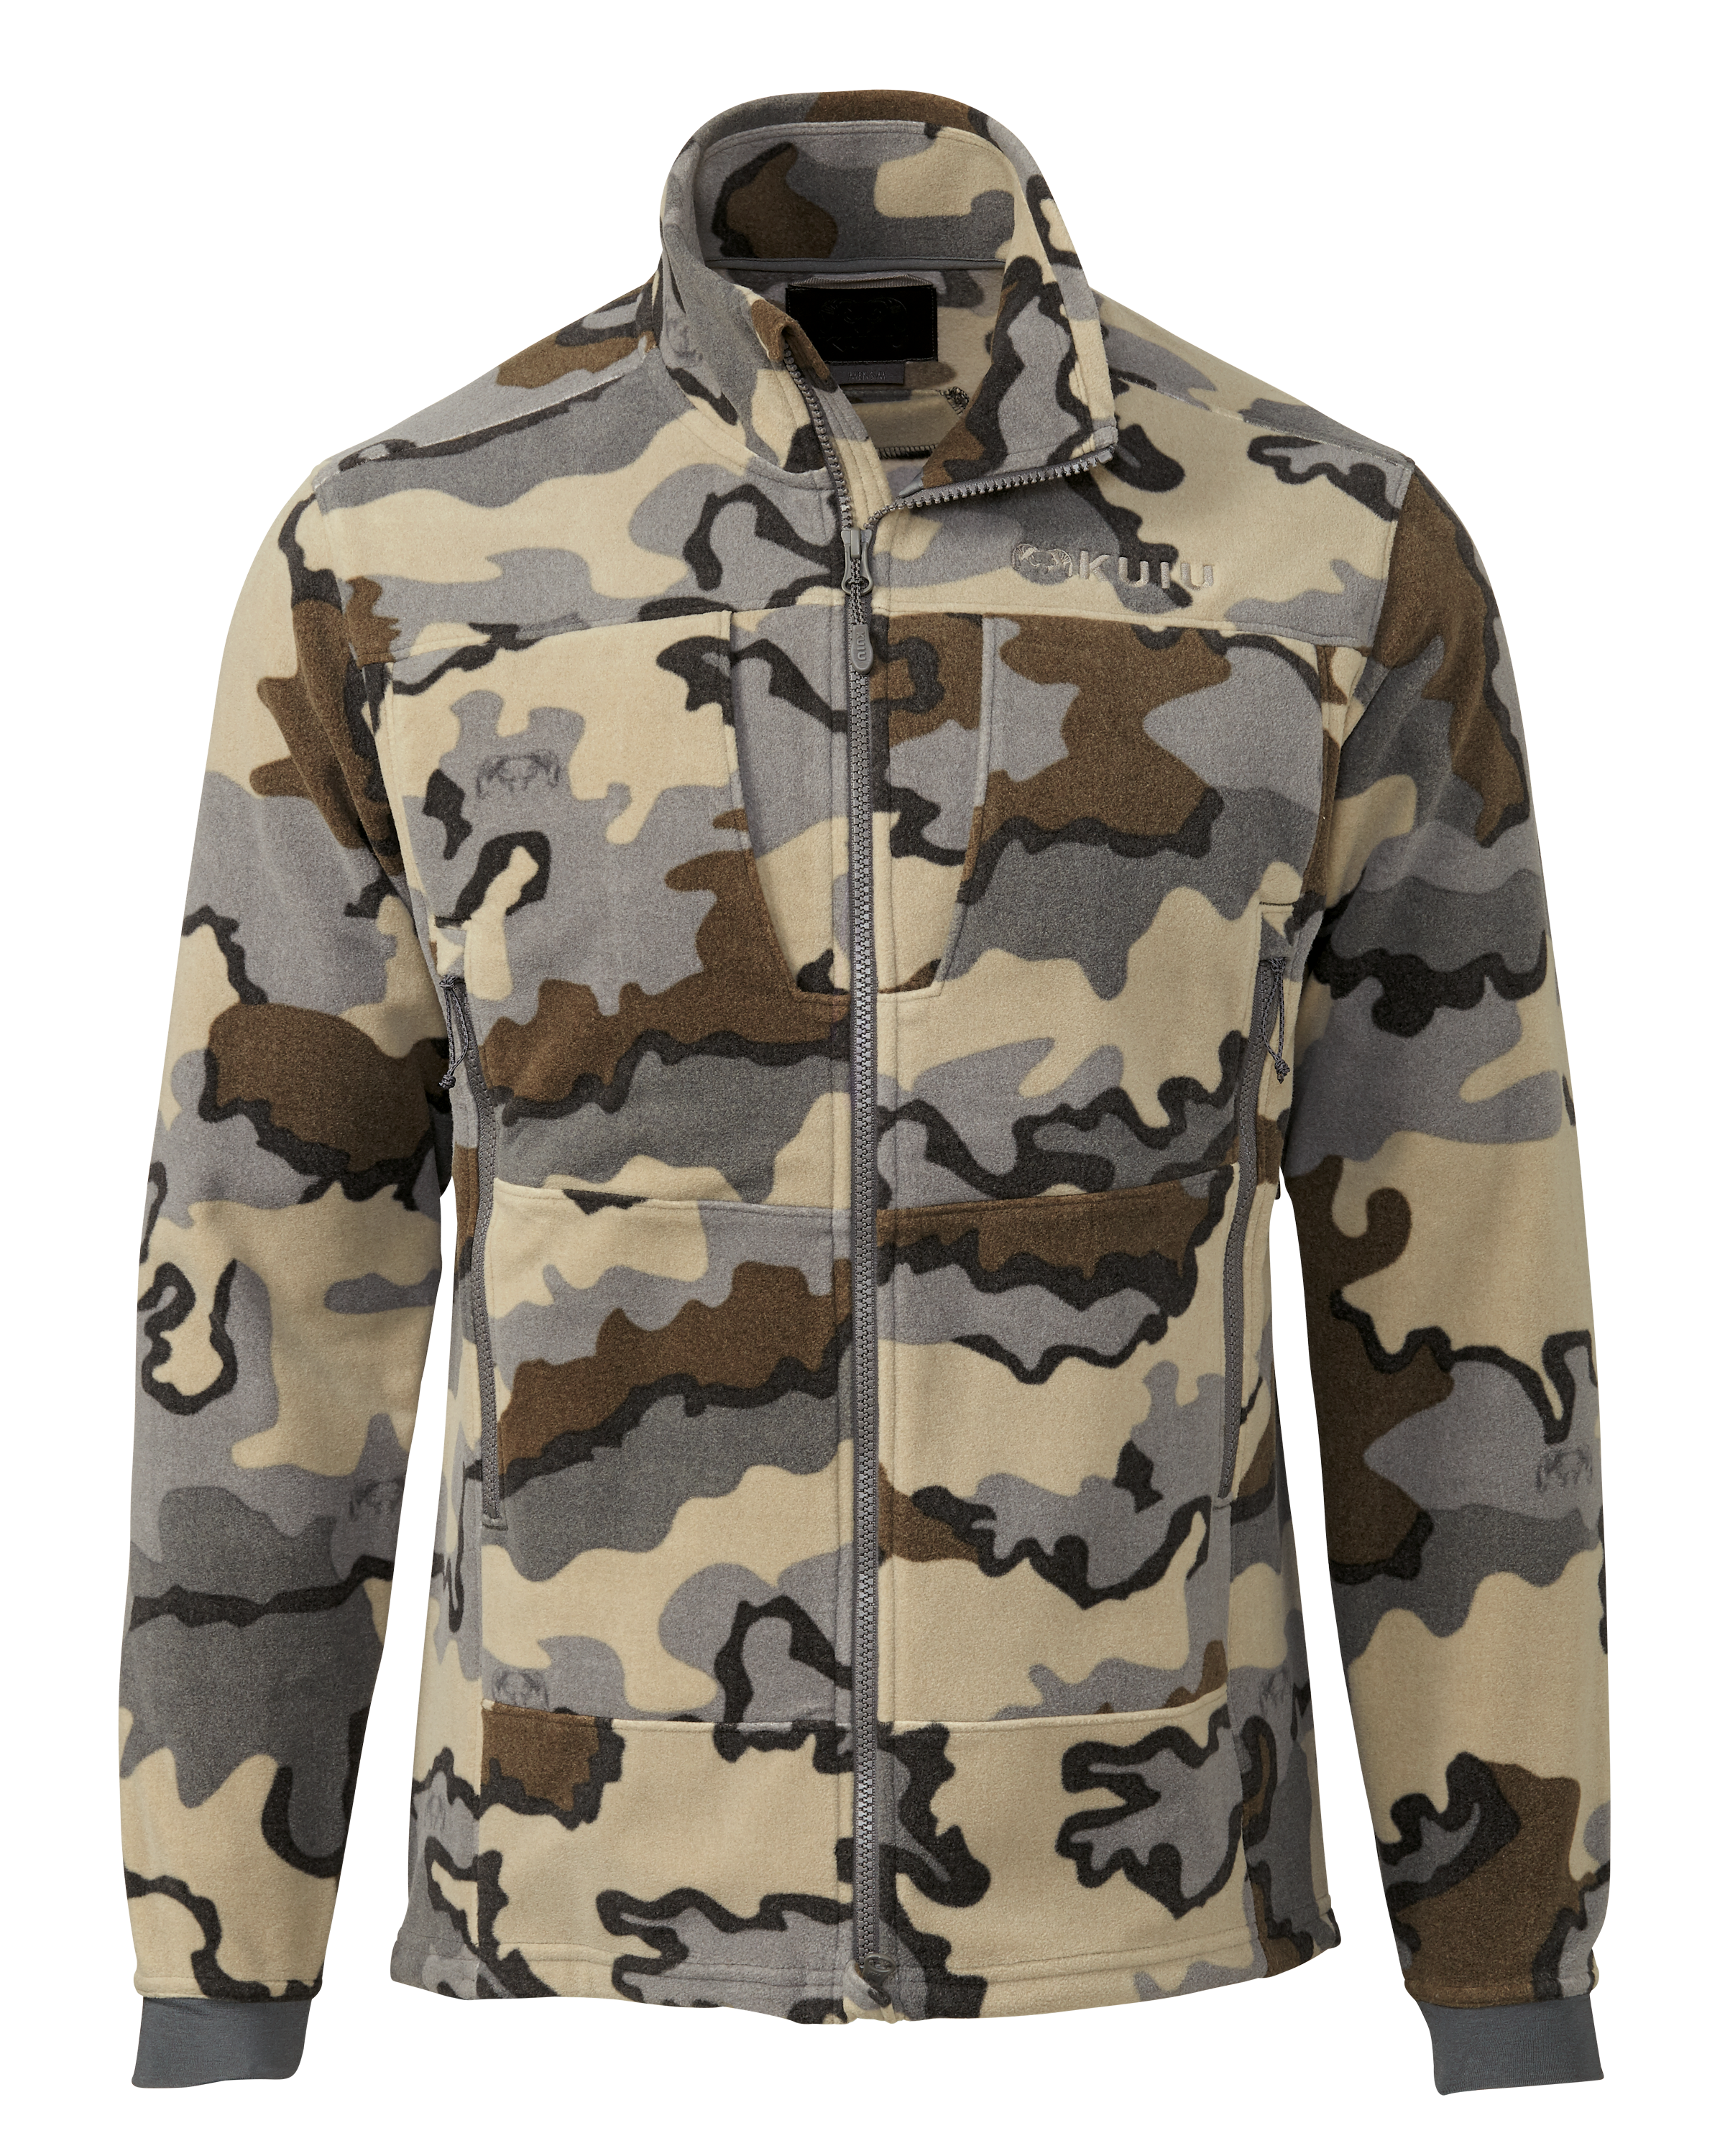 KUIU Wind Pro Fleece Full Zip Hunting Jacket in Vias | Size XL